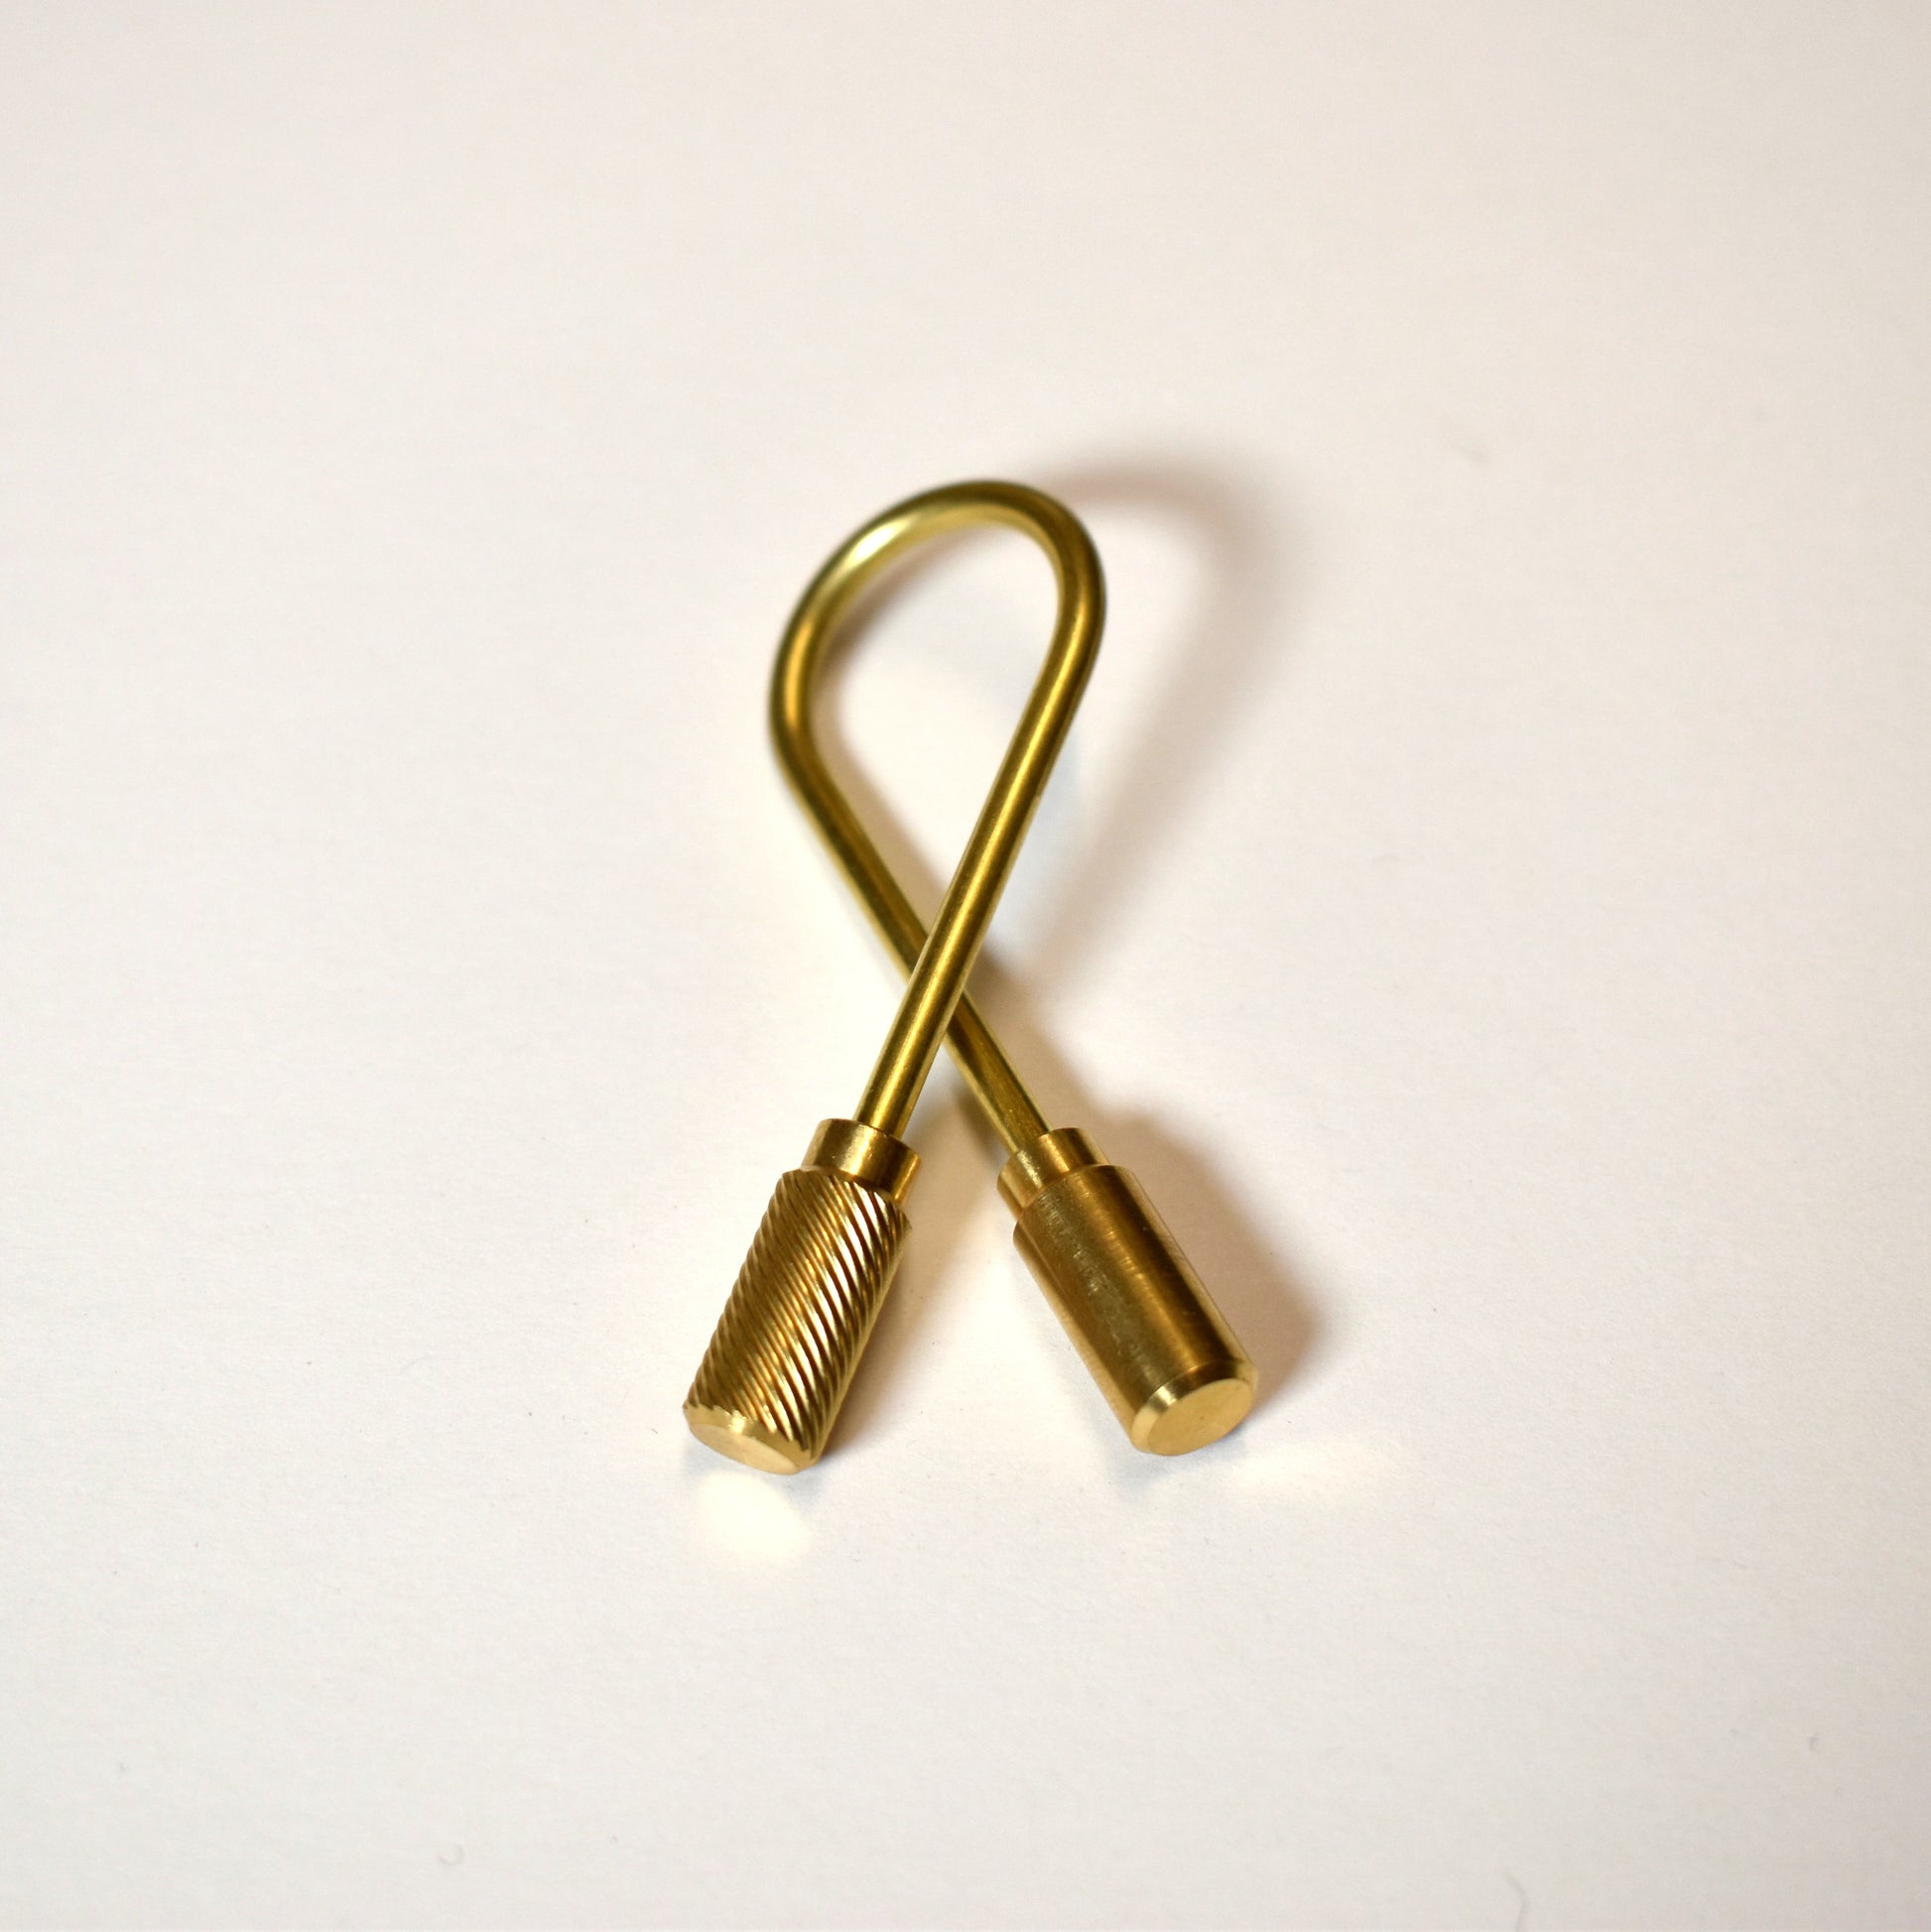 Helix-shaped keyring brass